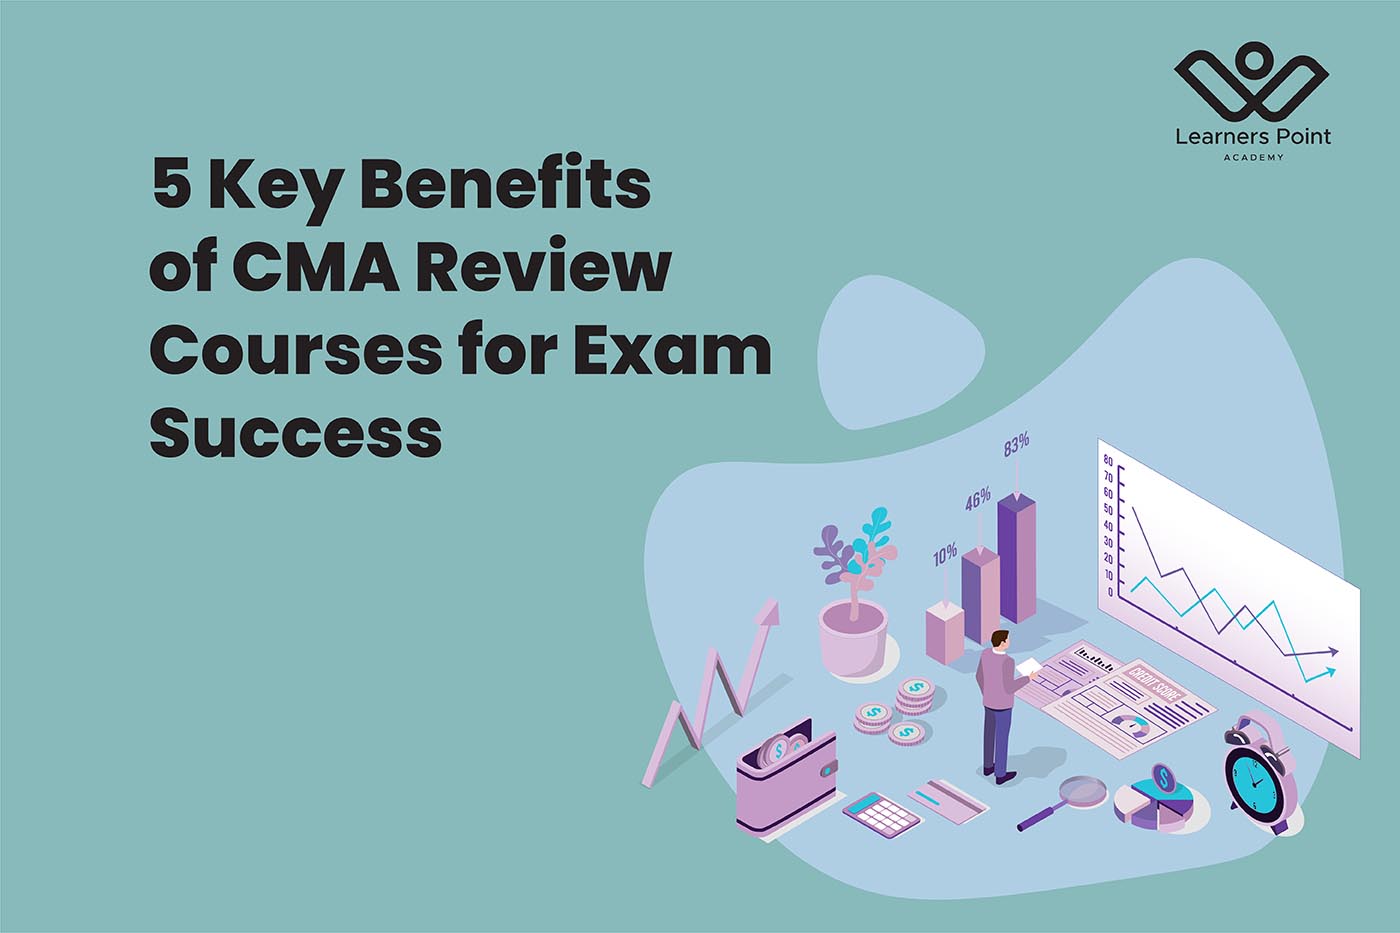 5 Key Benefits of CMA Review Courses for Exam Success